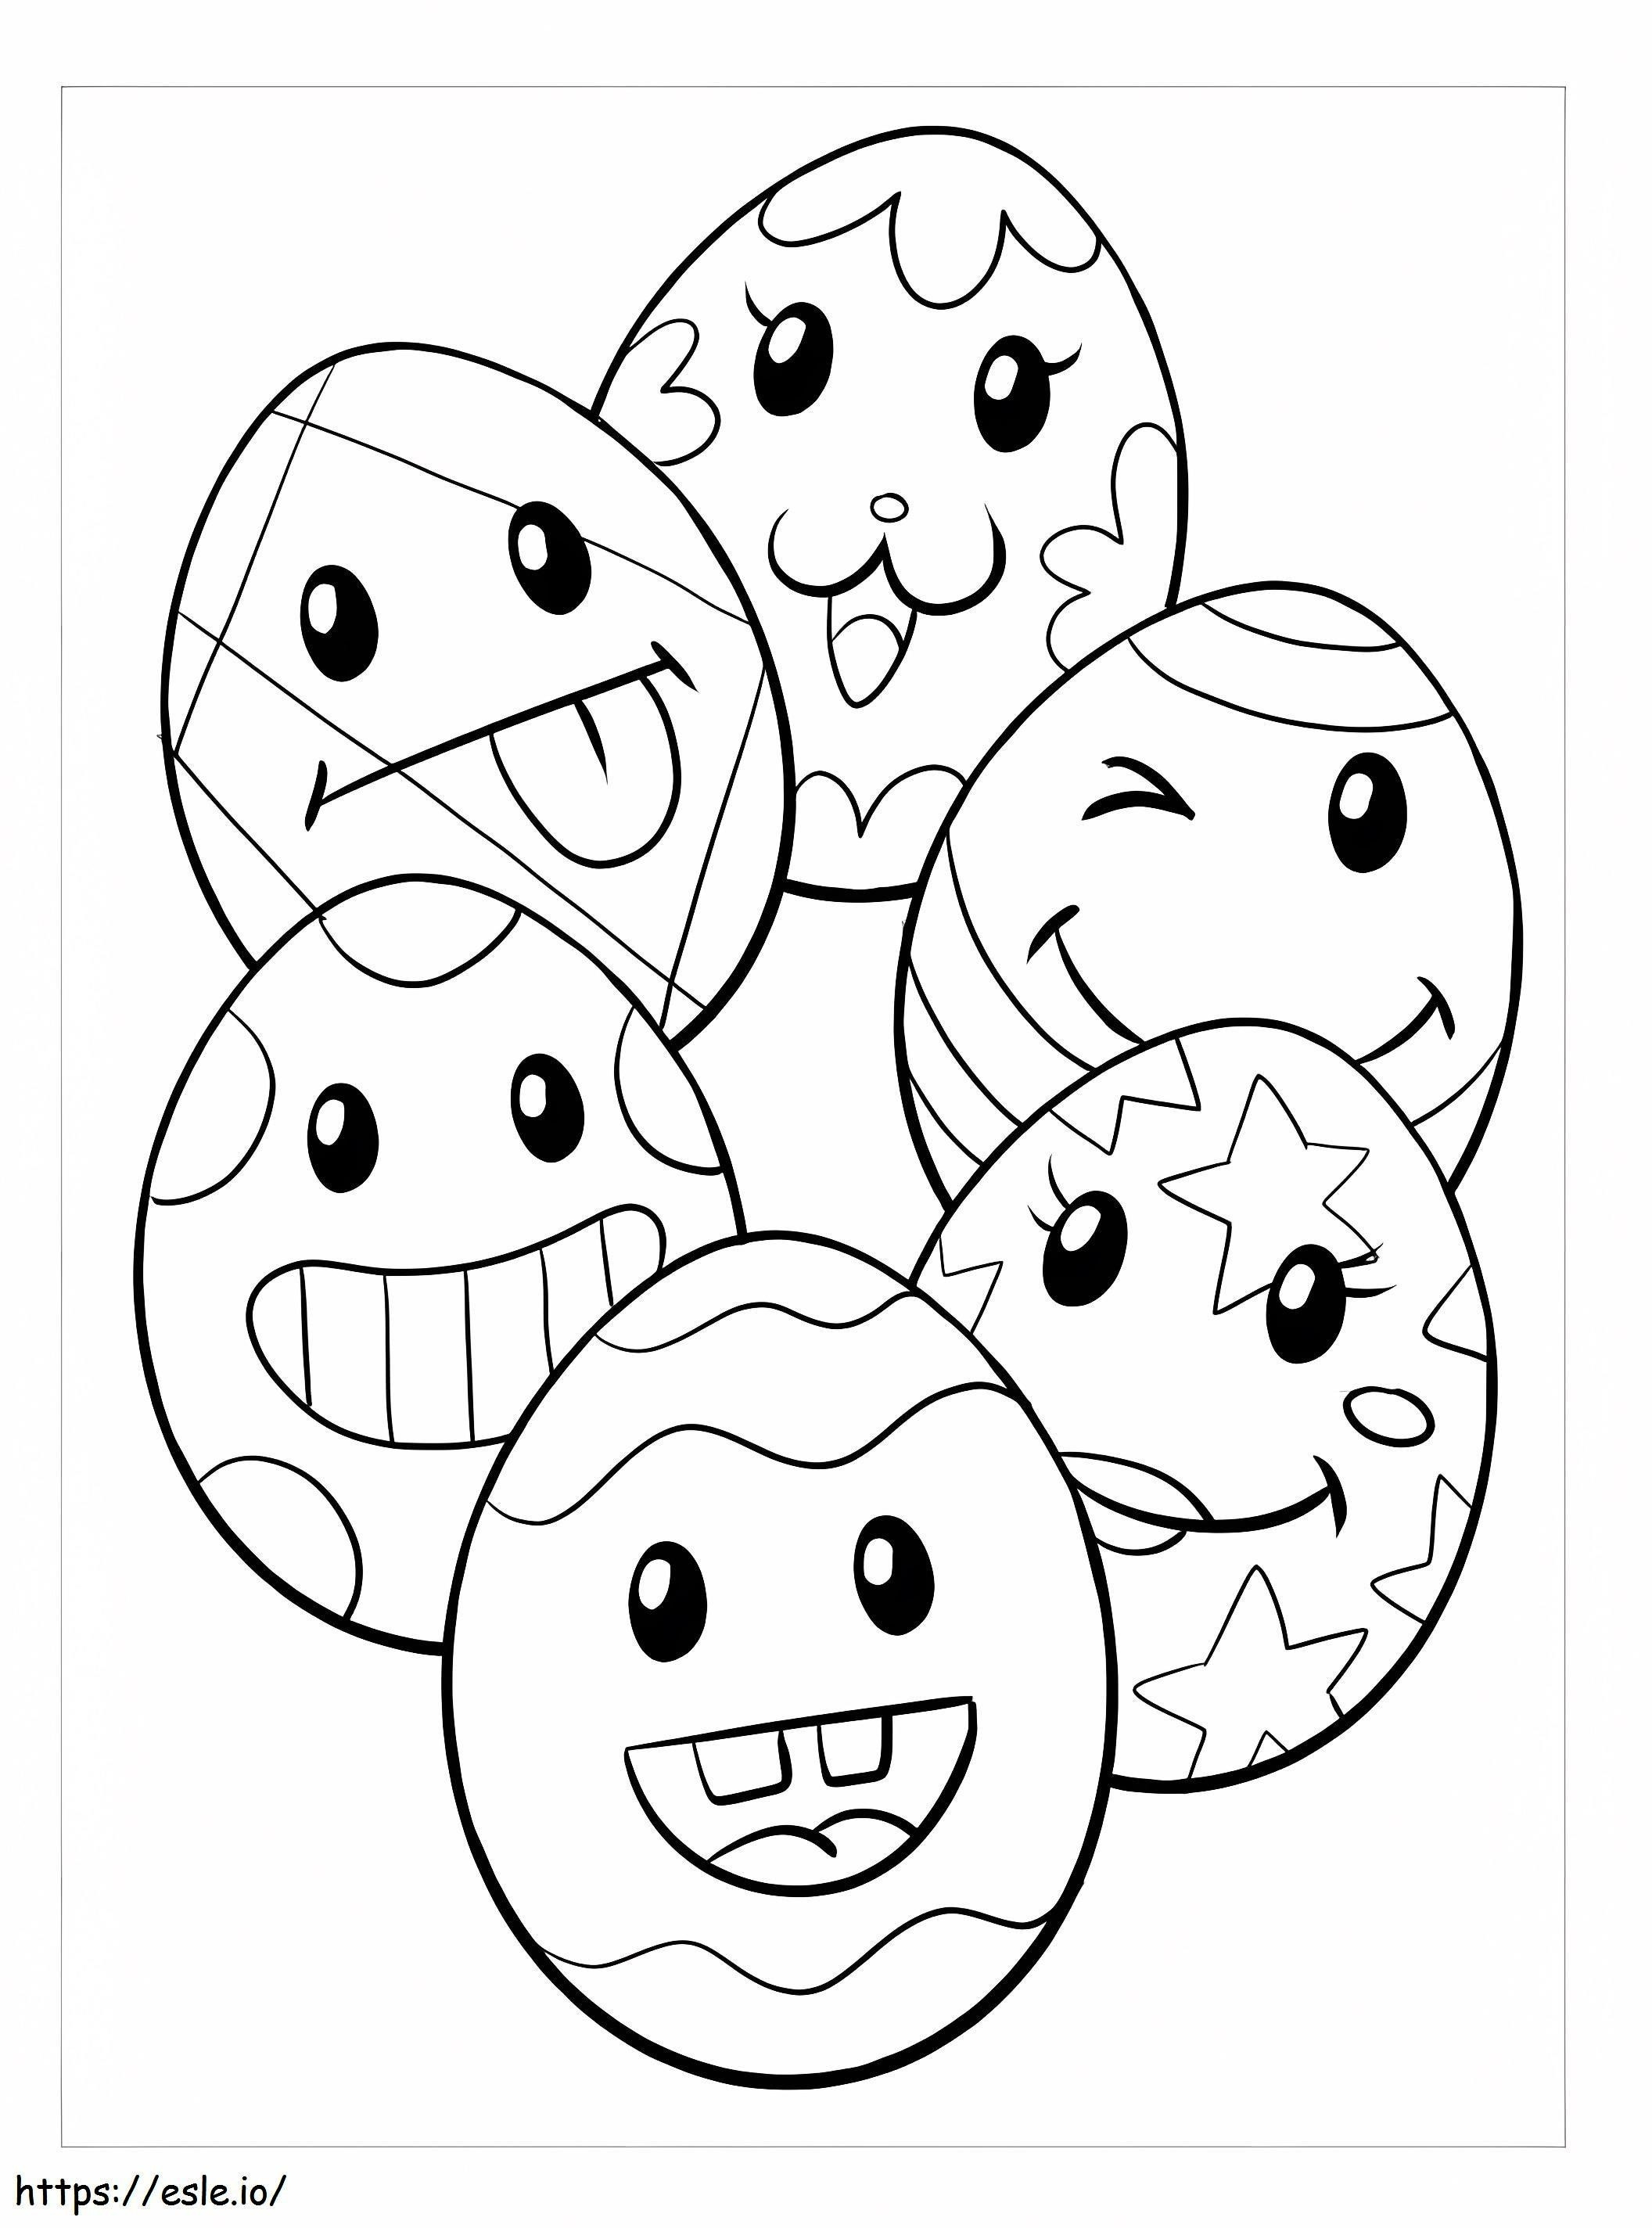 Seis Ovos de Páscoa de Desenho Animado para colorir